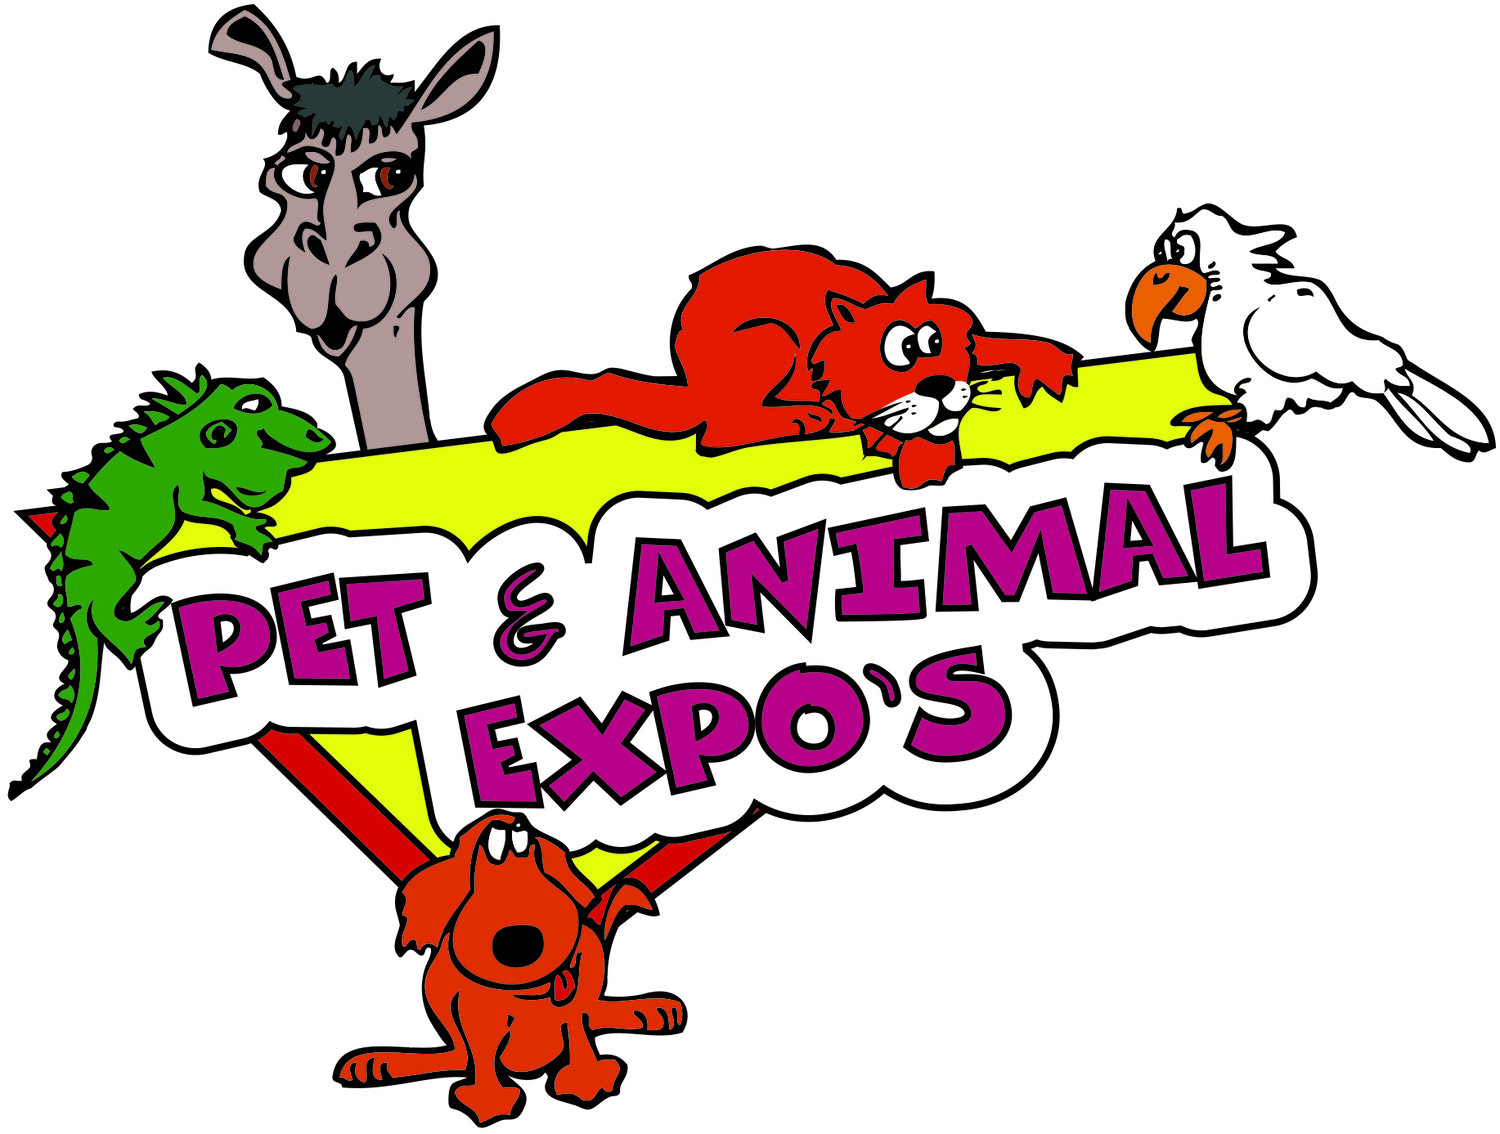 Auckland Pet & Animal Expo